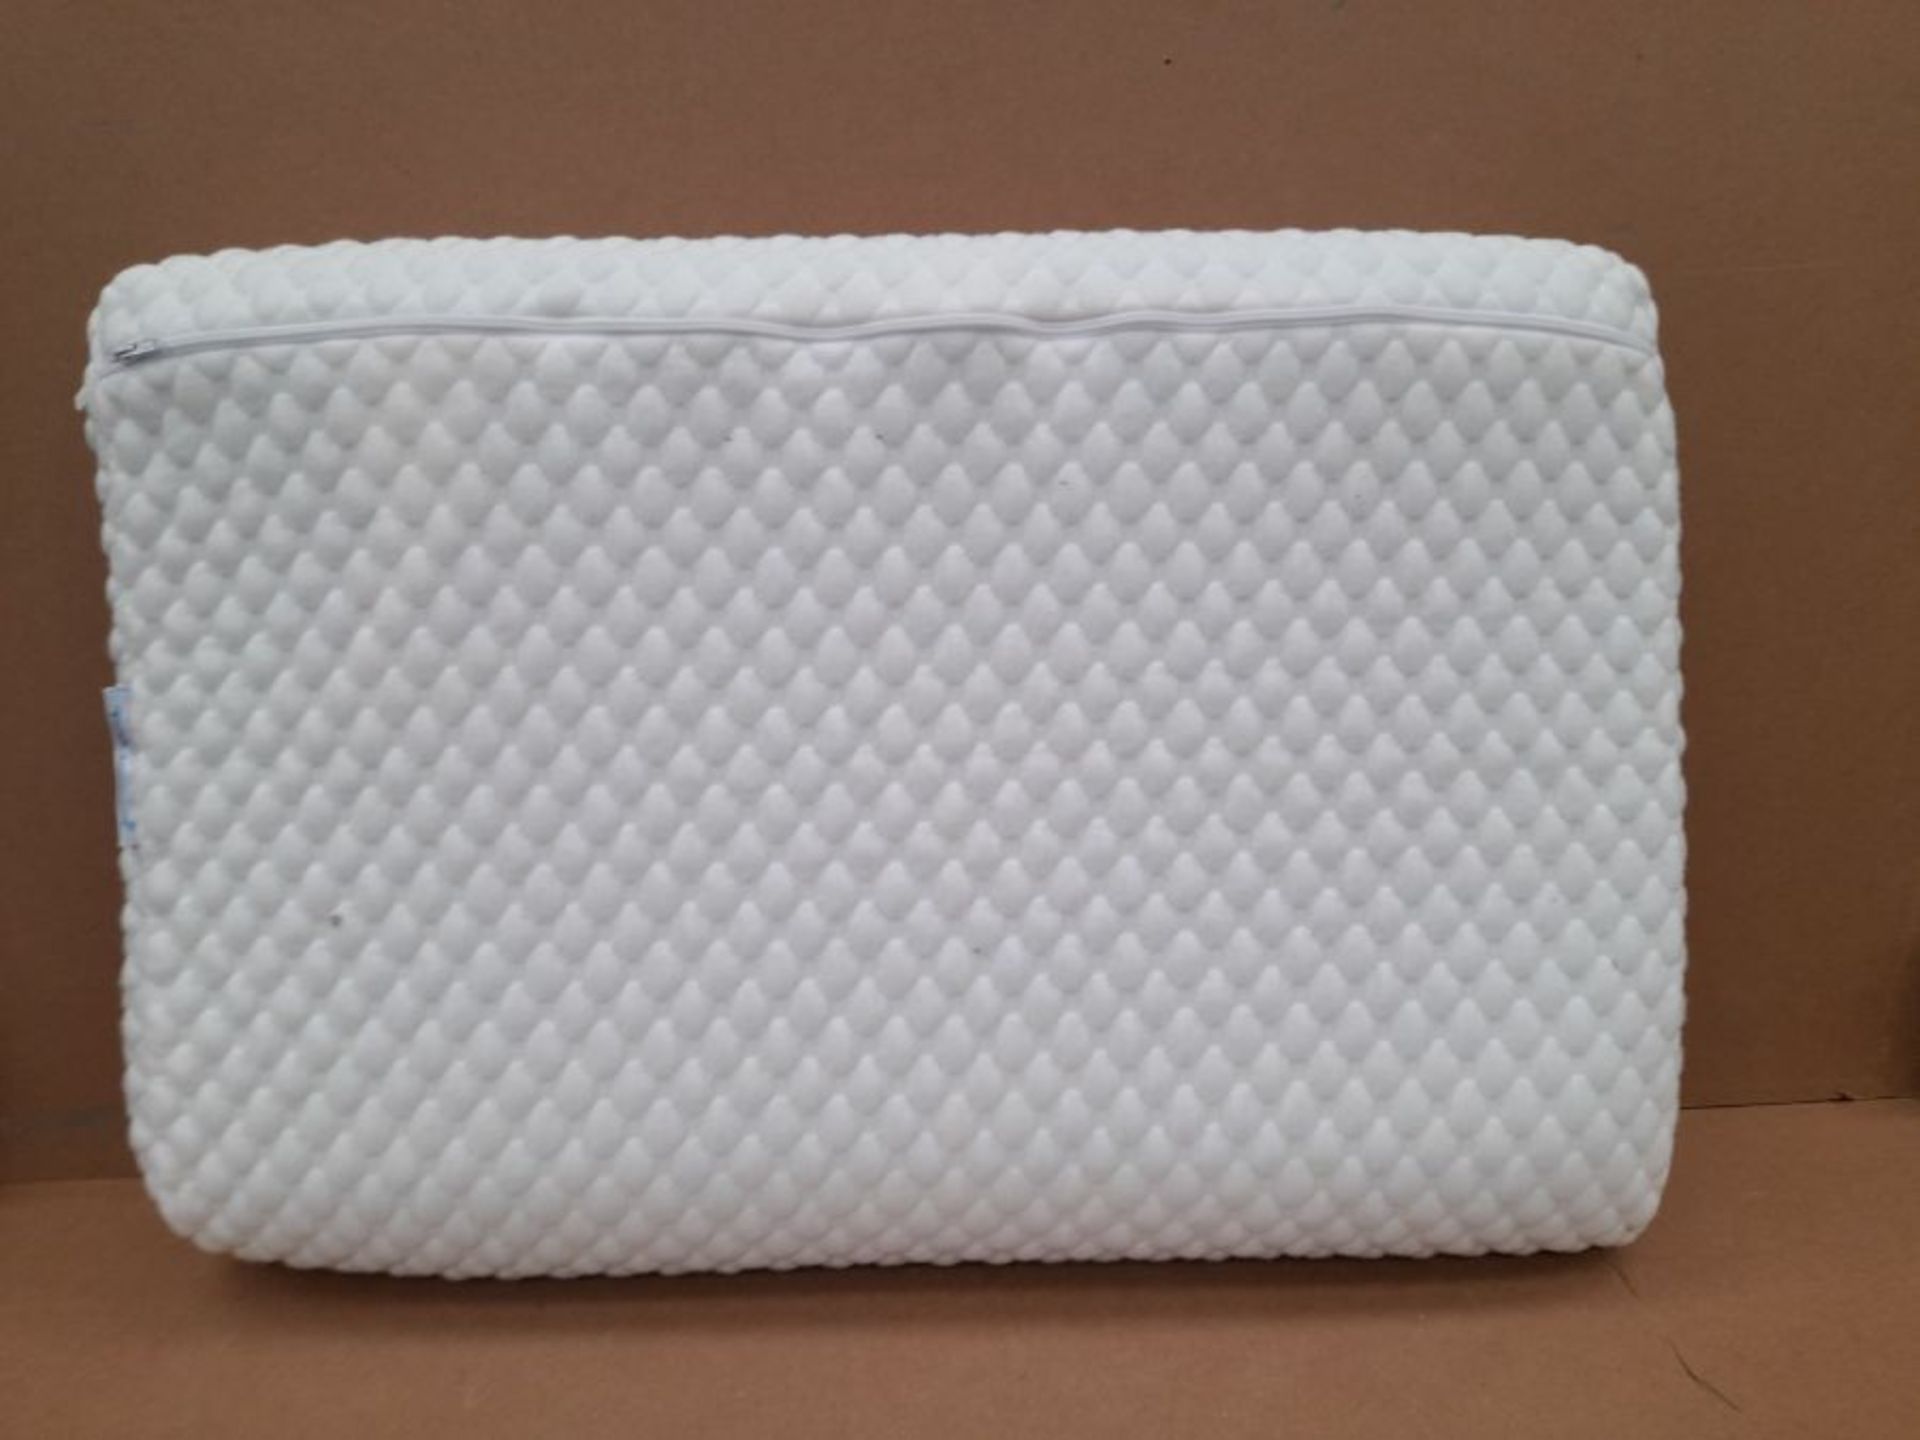 TAMPOR Orthopedic Contour Pillow Memory Foam Pillow Ergonomic Neck Support Pillow Deep - Image 3 of 3